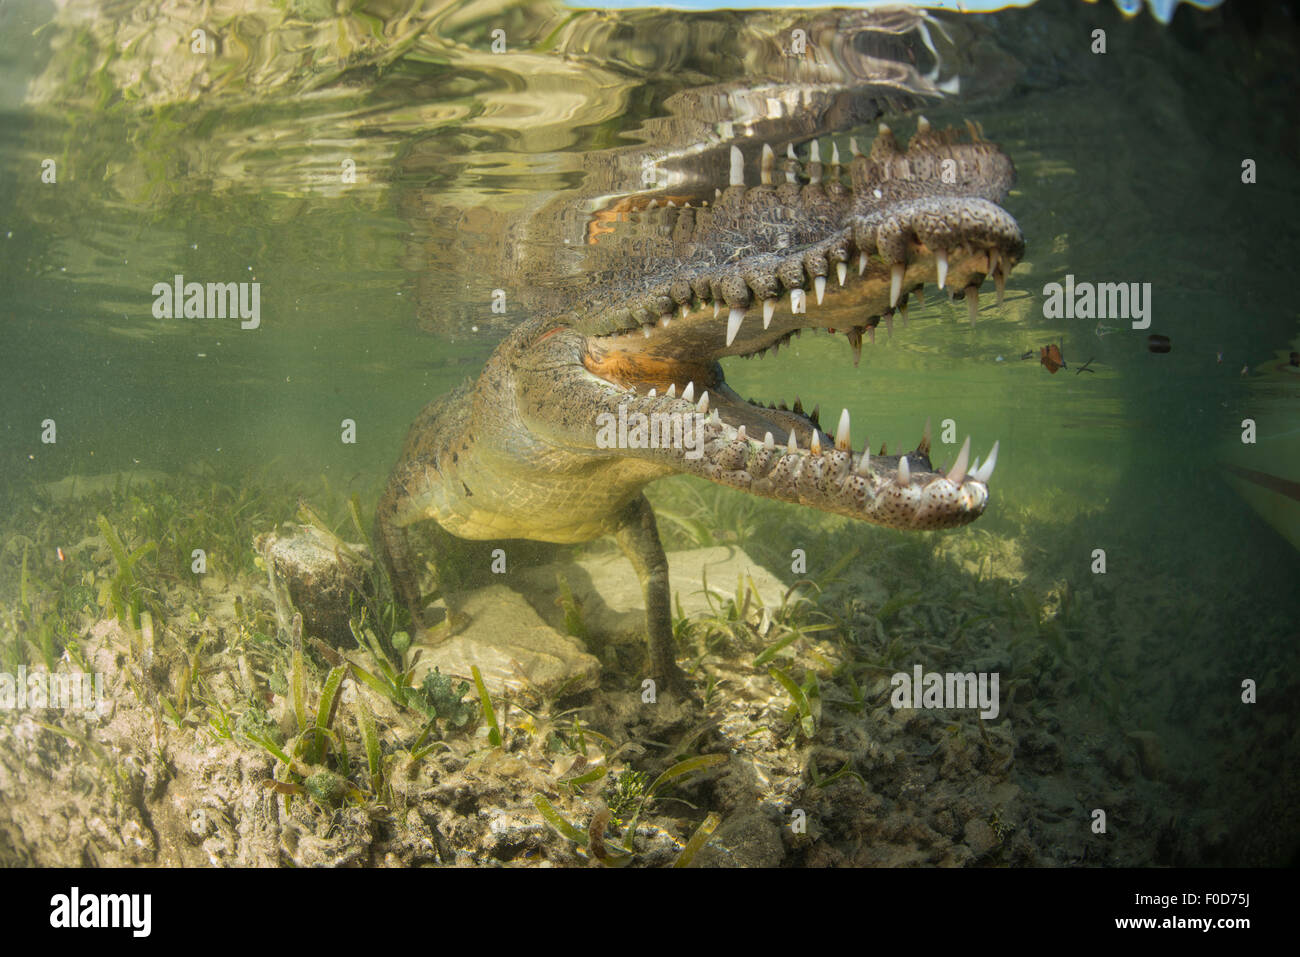 American saltwater crocodile (Crocodylus acutus) in mangrove with mouth open showing teeth, Jardines De La Reina, Cuba. Stock Photo